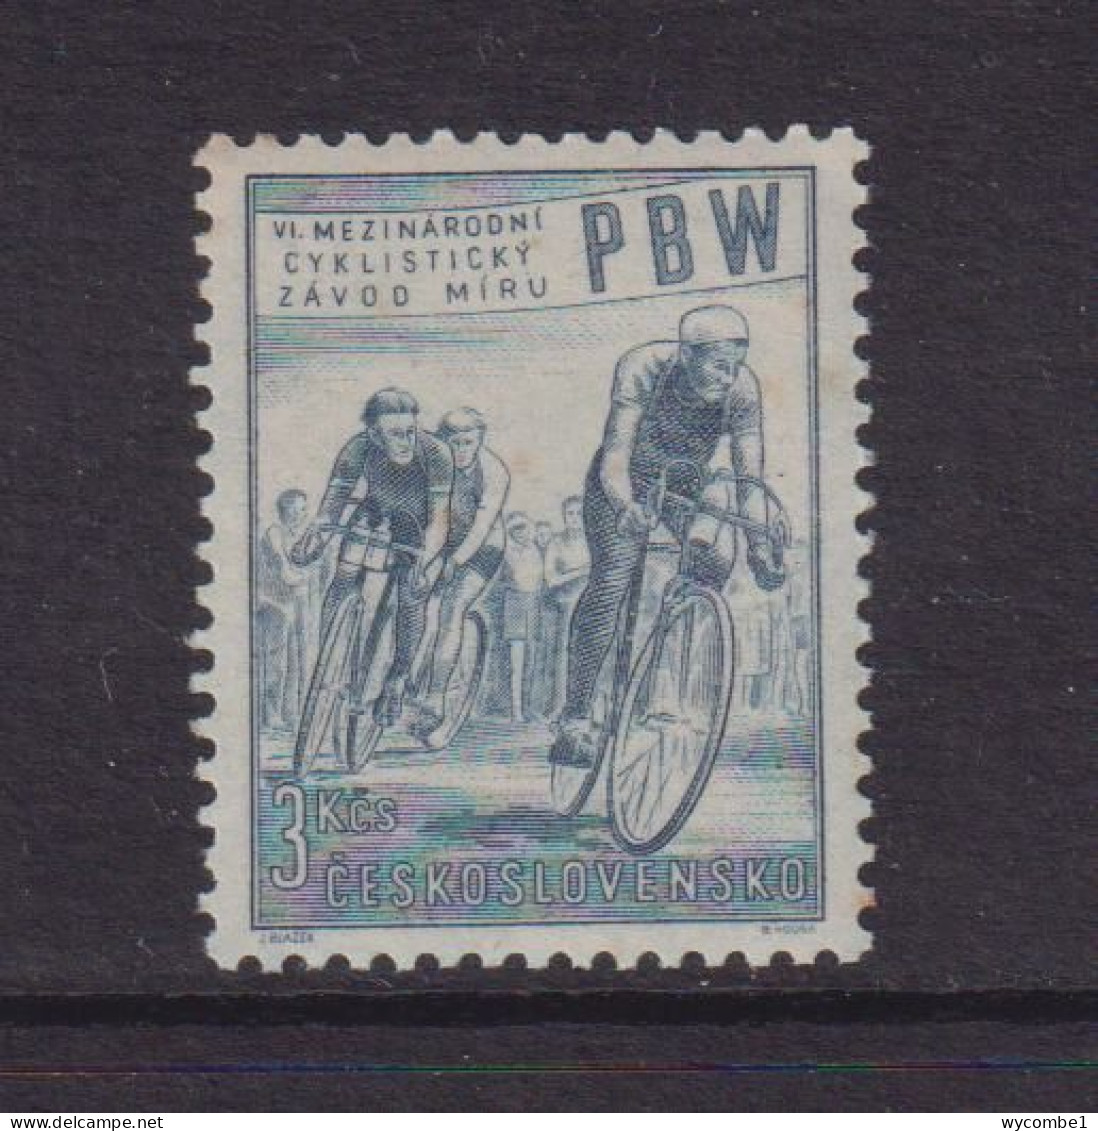 CZECHOSLOVAKIA  - 1953  Cycle Race  3k  Never Hinged Mint - Ungebraucht